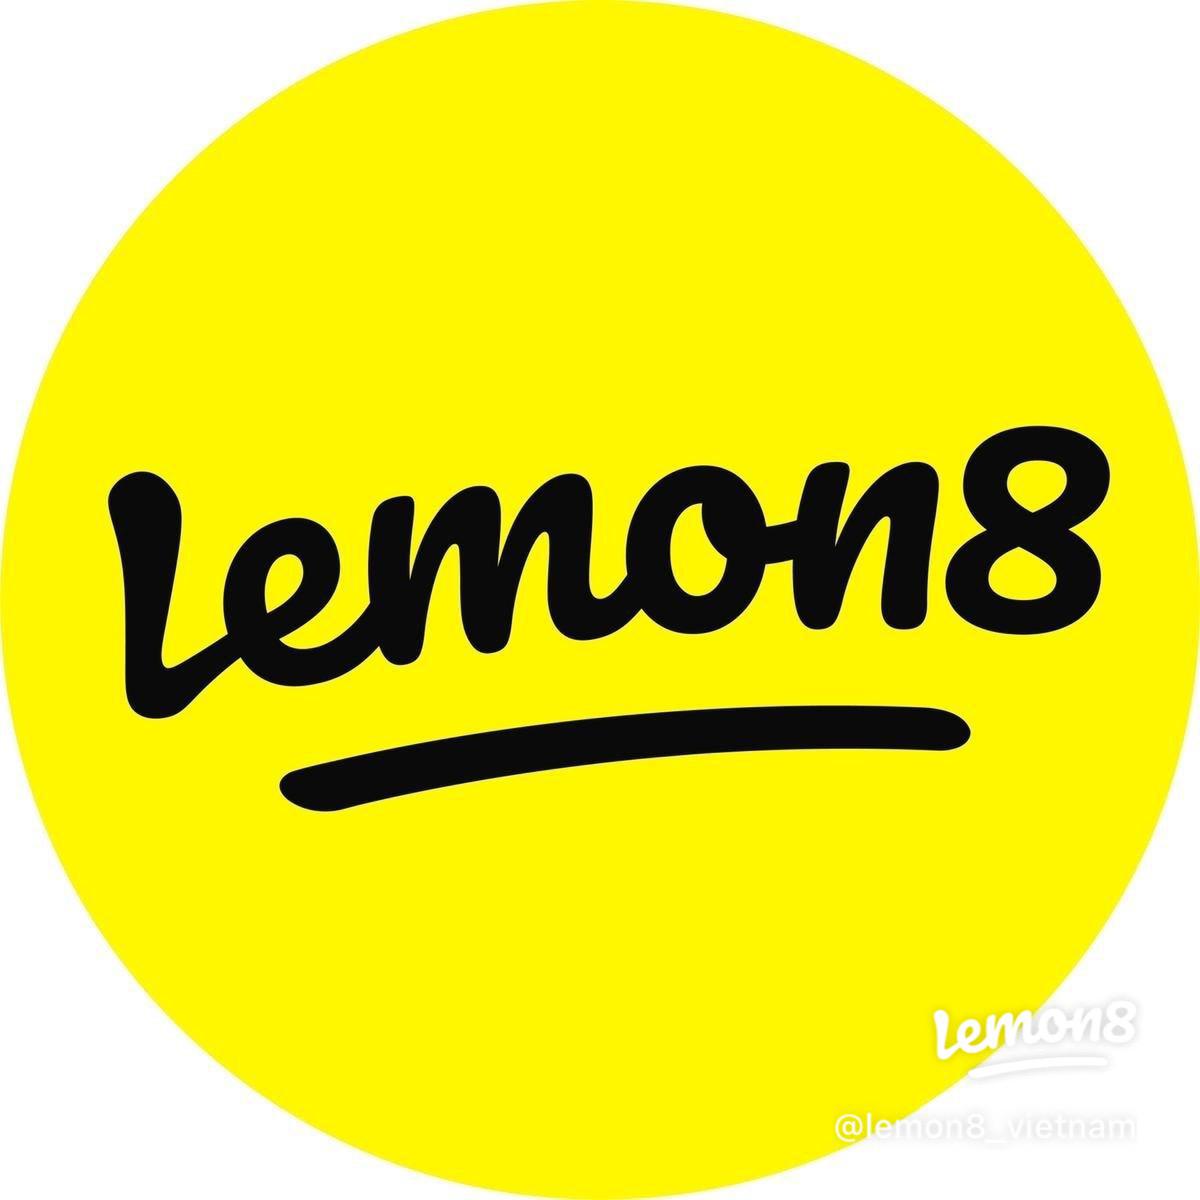 Lemon8 UK's images